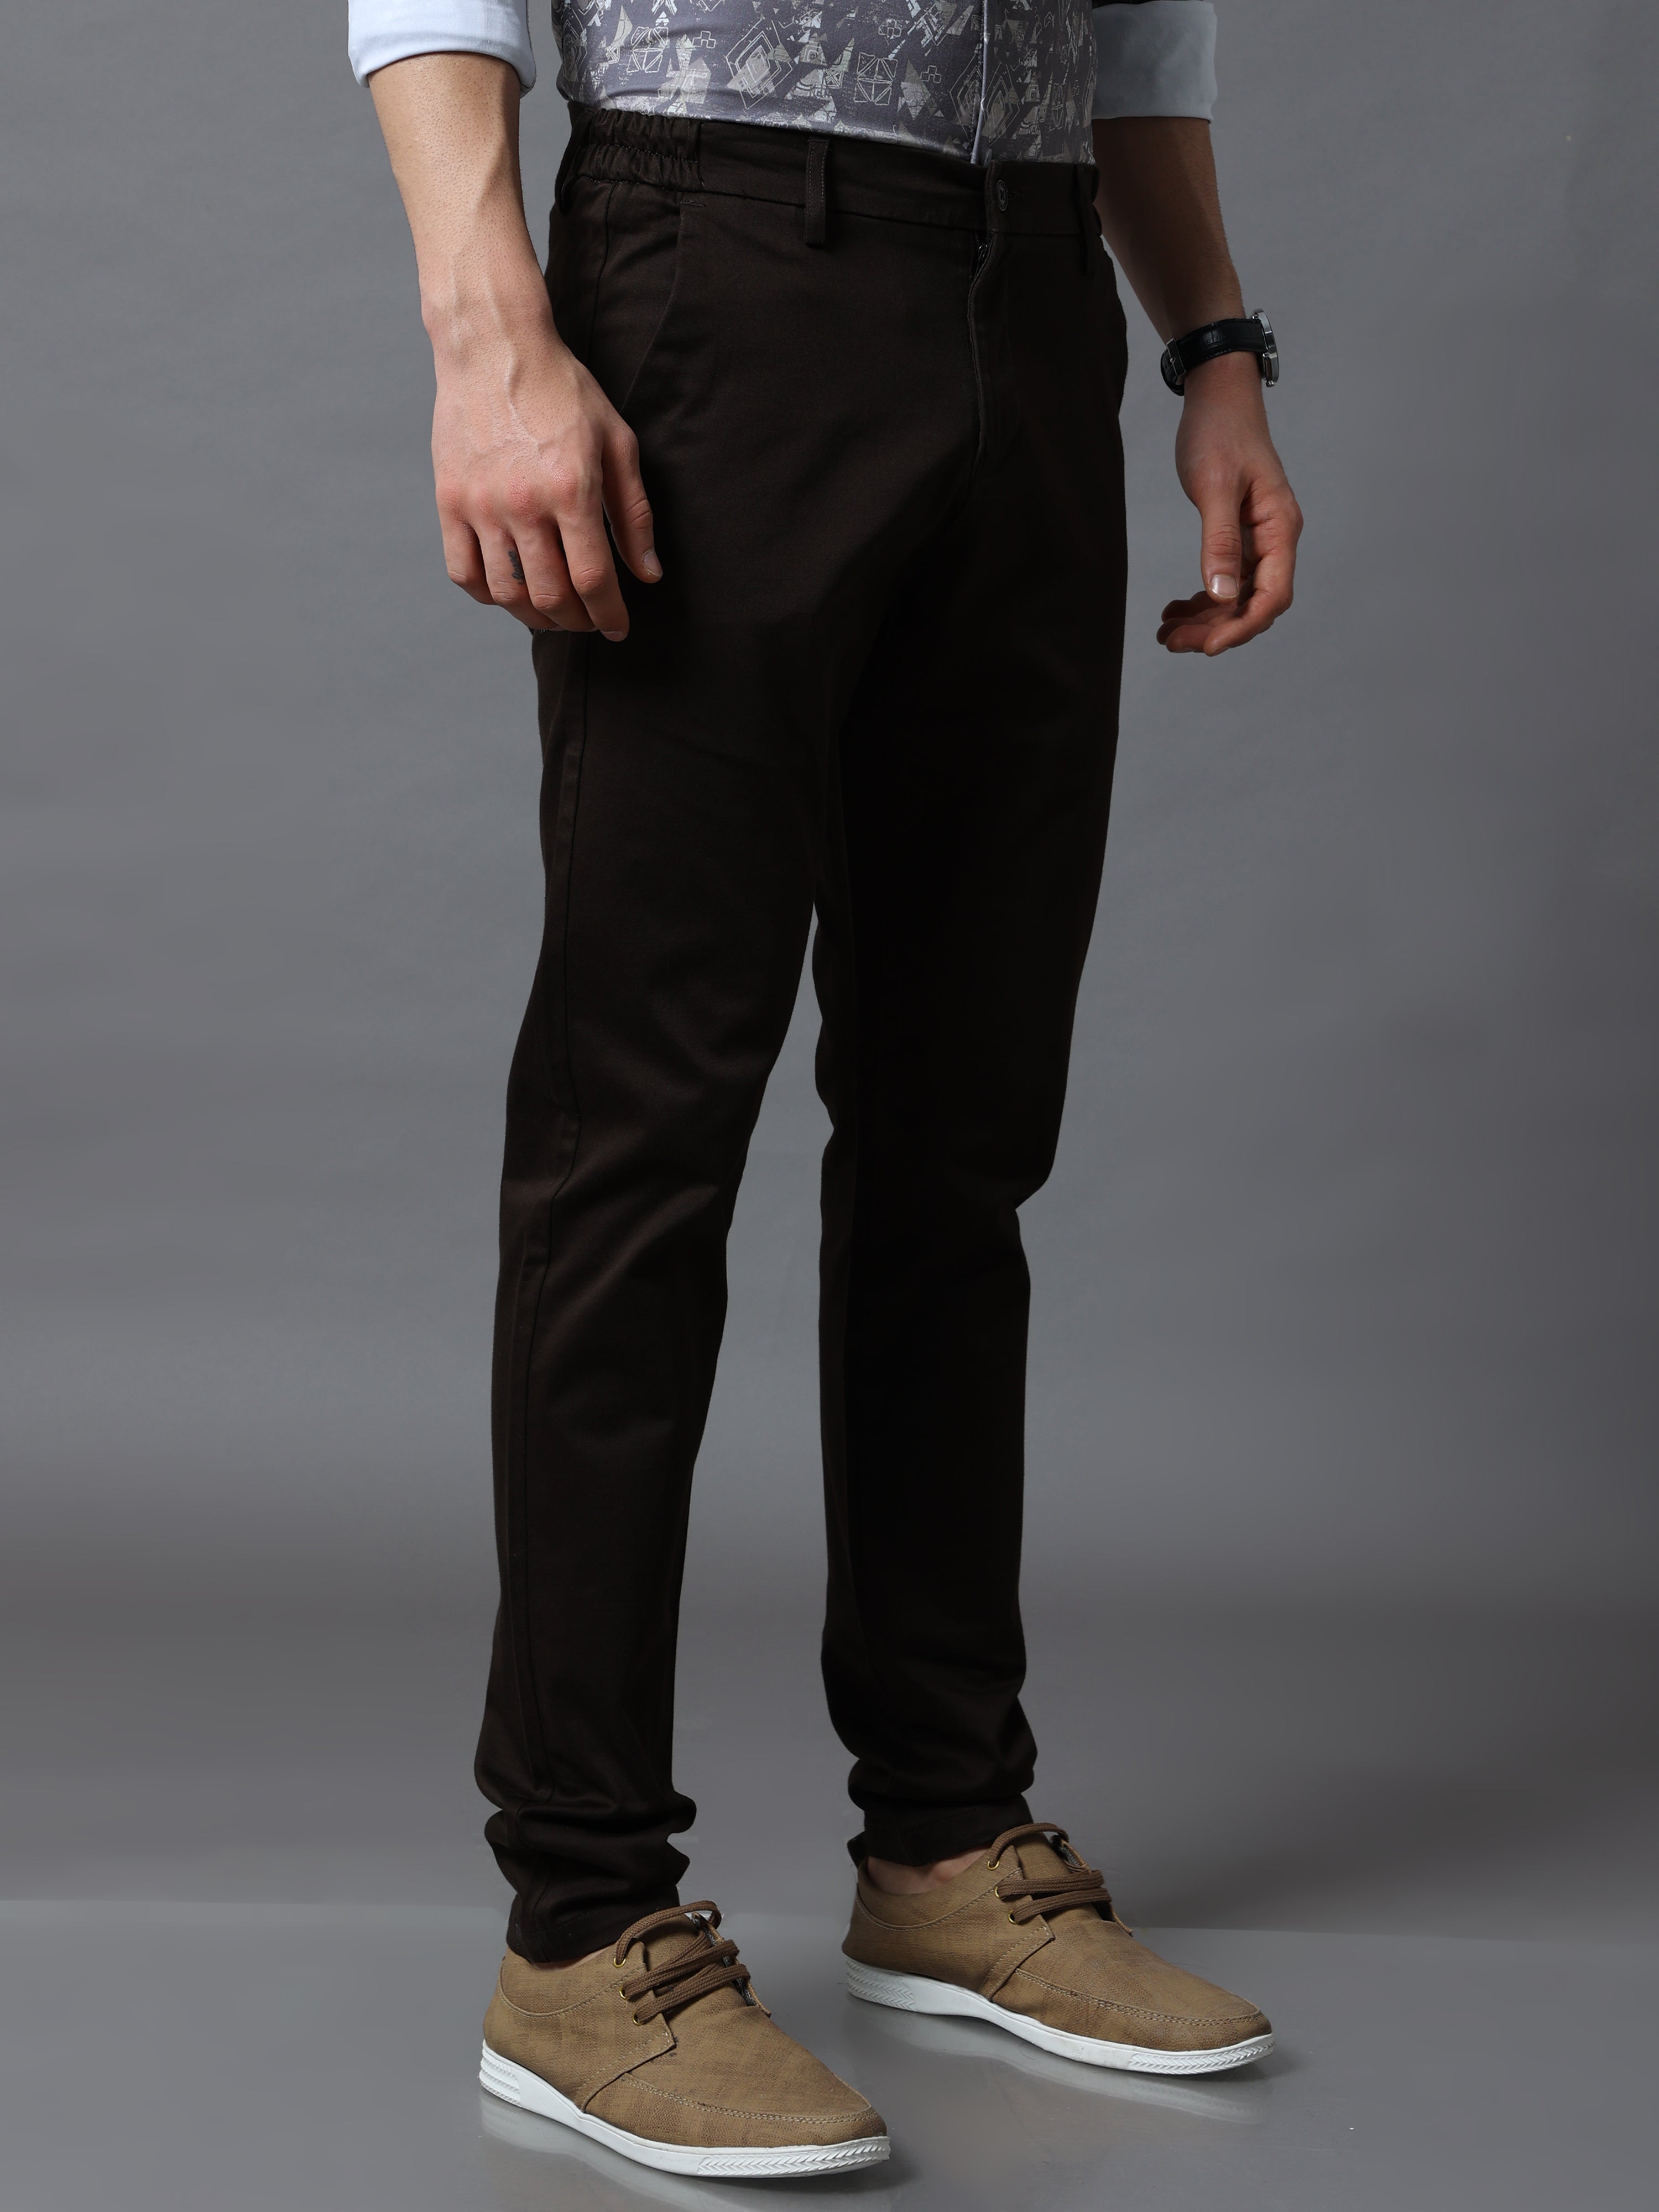 Buy Symbol Premium Men's Easy Care Flexi Waist Casual Pants: Slim Fit at  Amazon.in